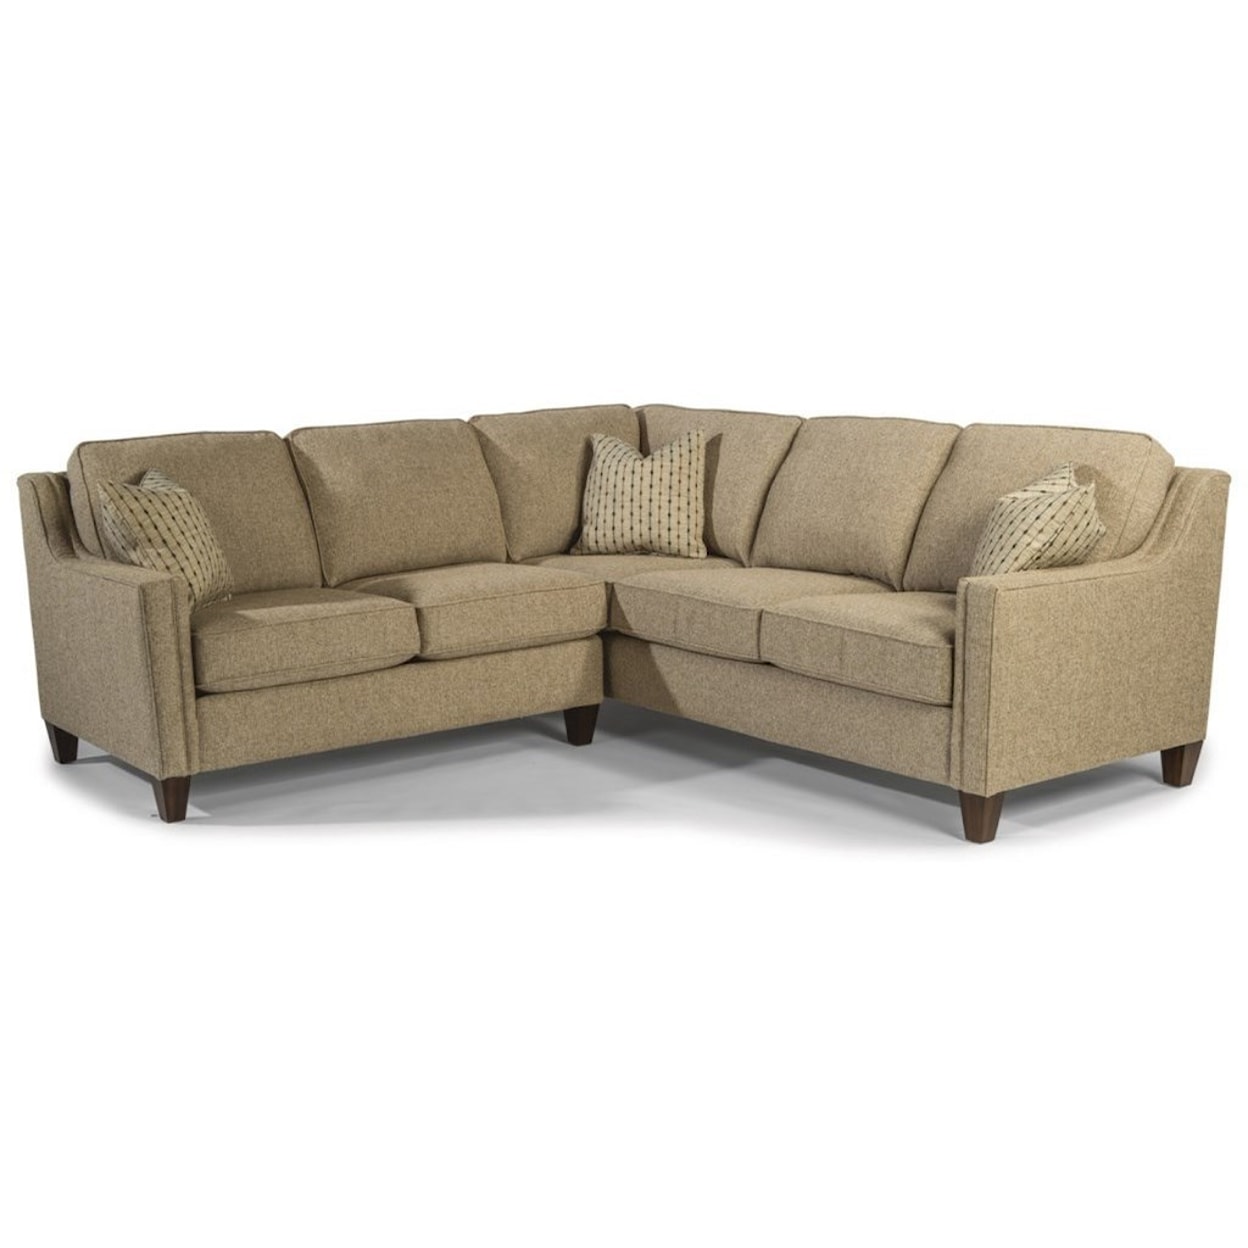 Flexsteel Finley Sectional Sofa